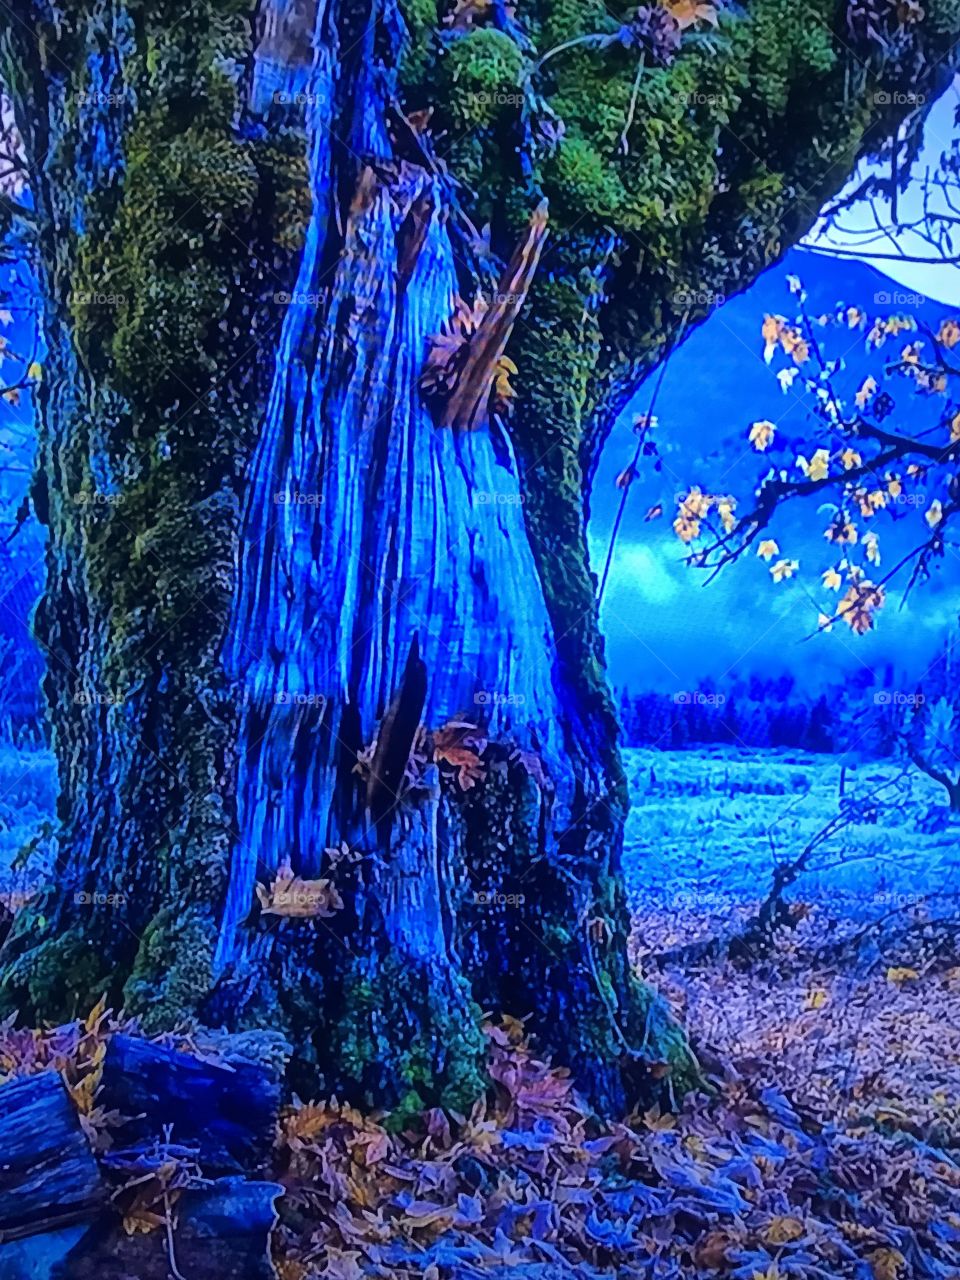 Blue Trees